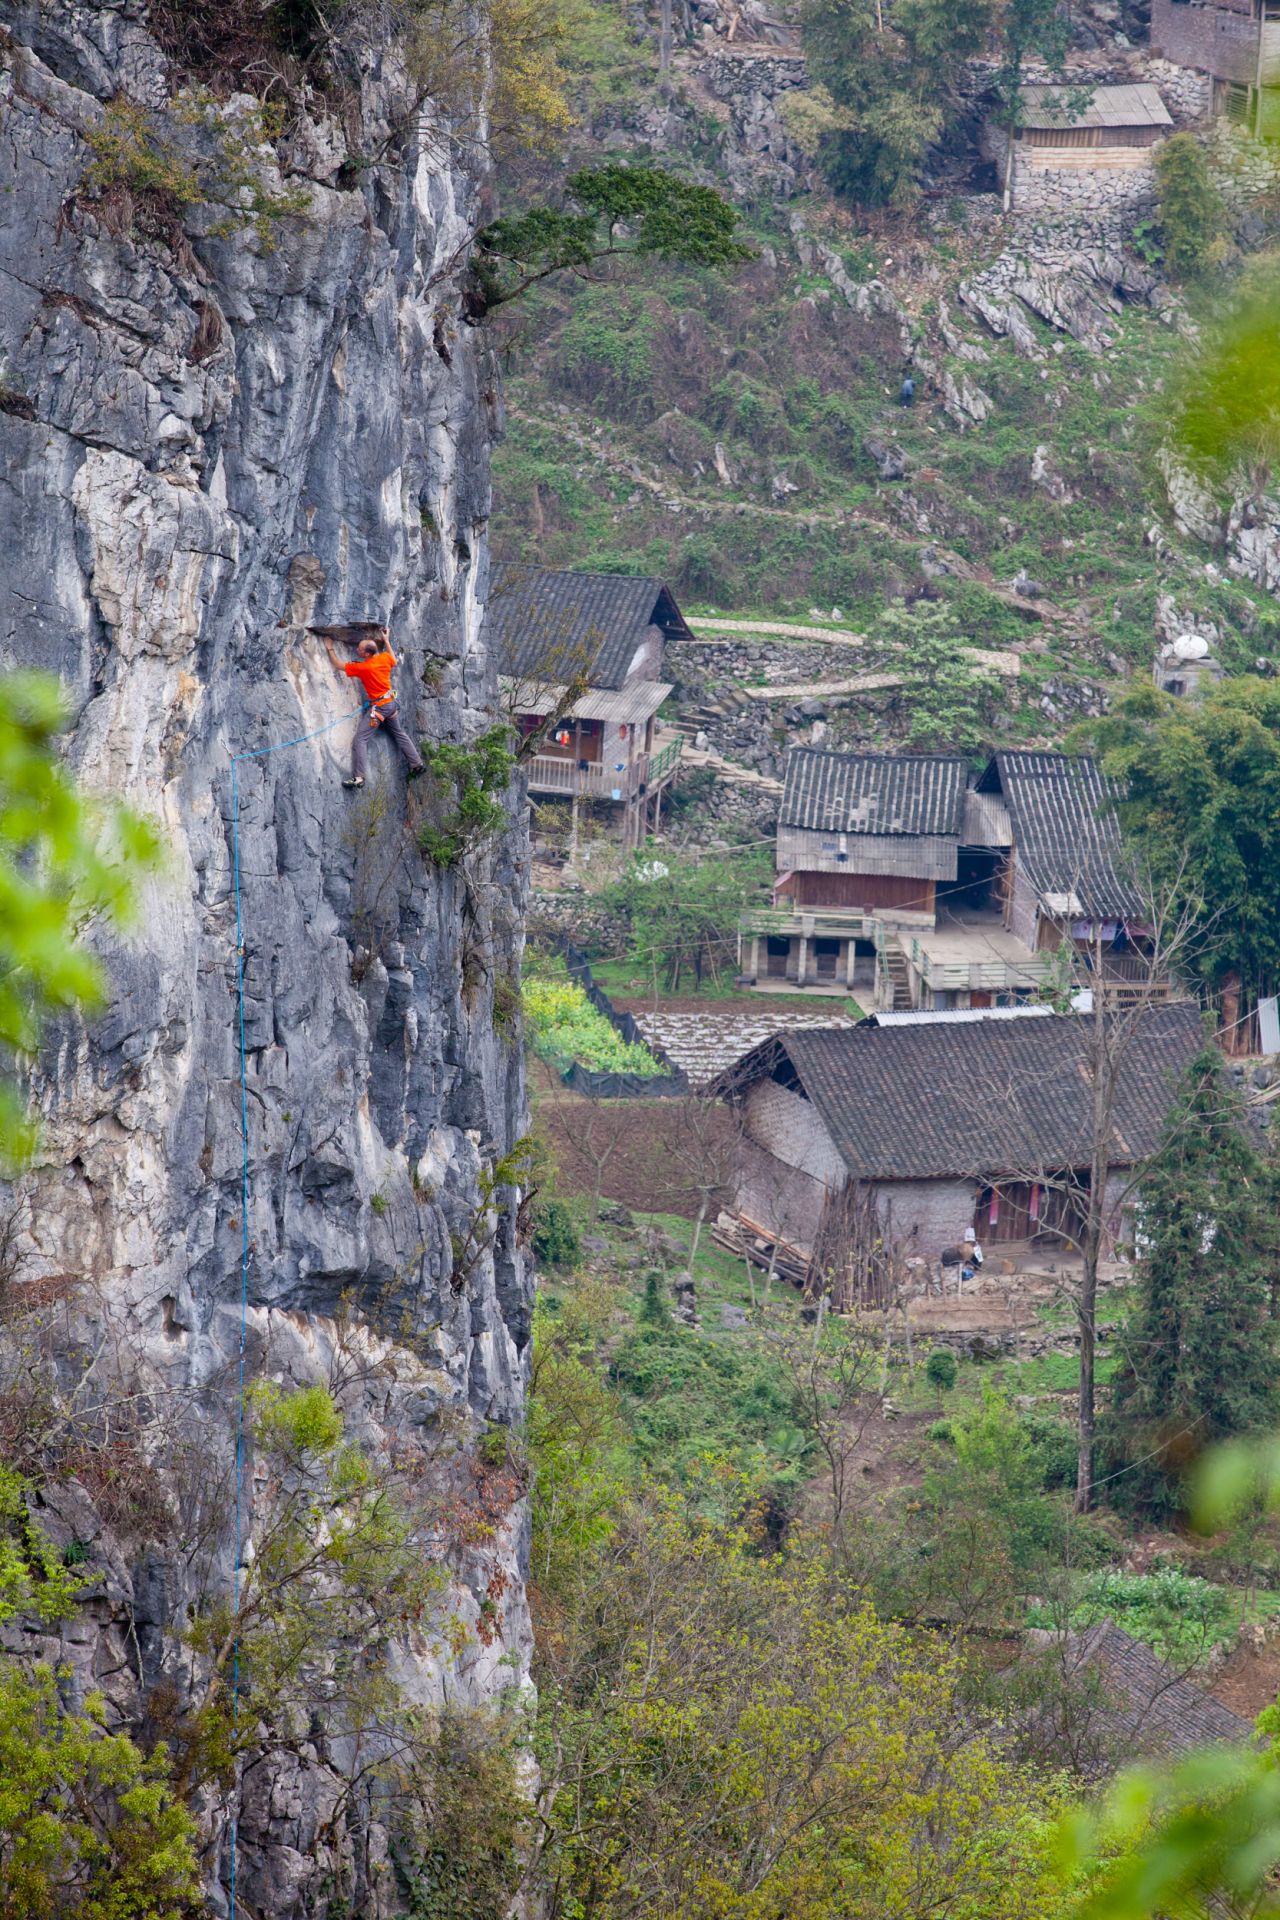 Getu River National Park in Guizhou, southwestern China, is emerging as a major rock climbing destination. 